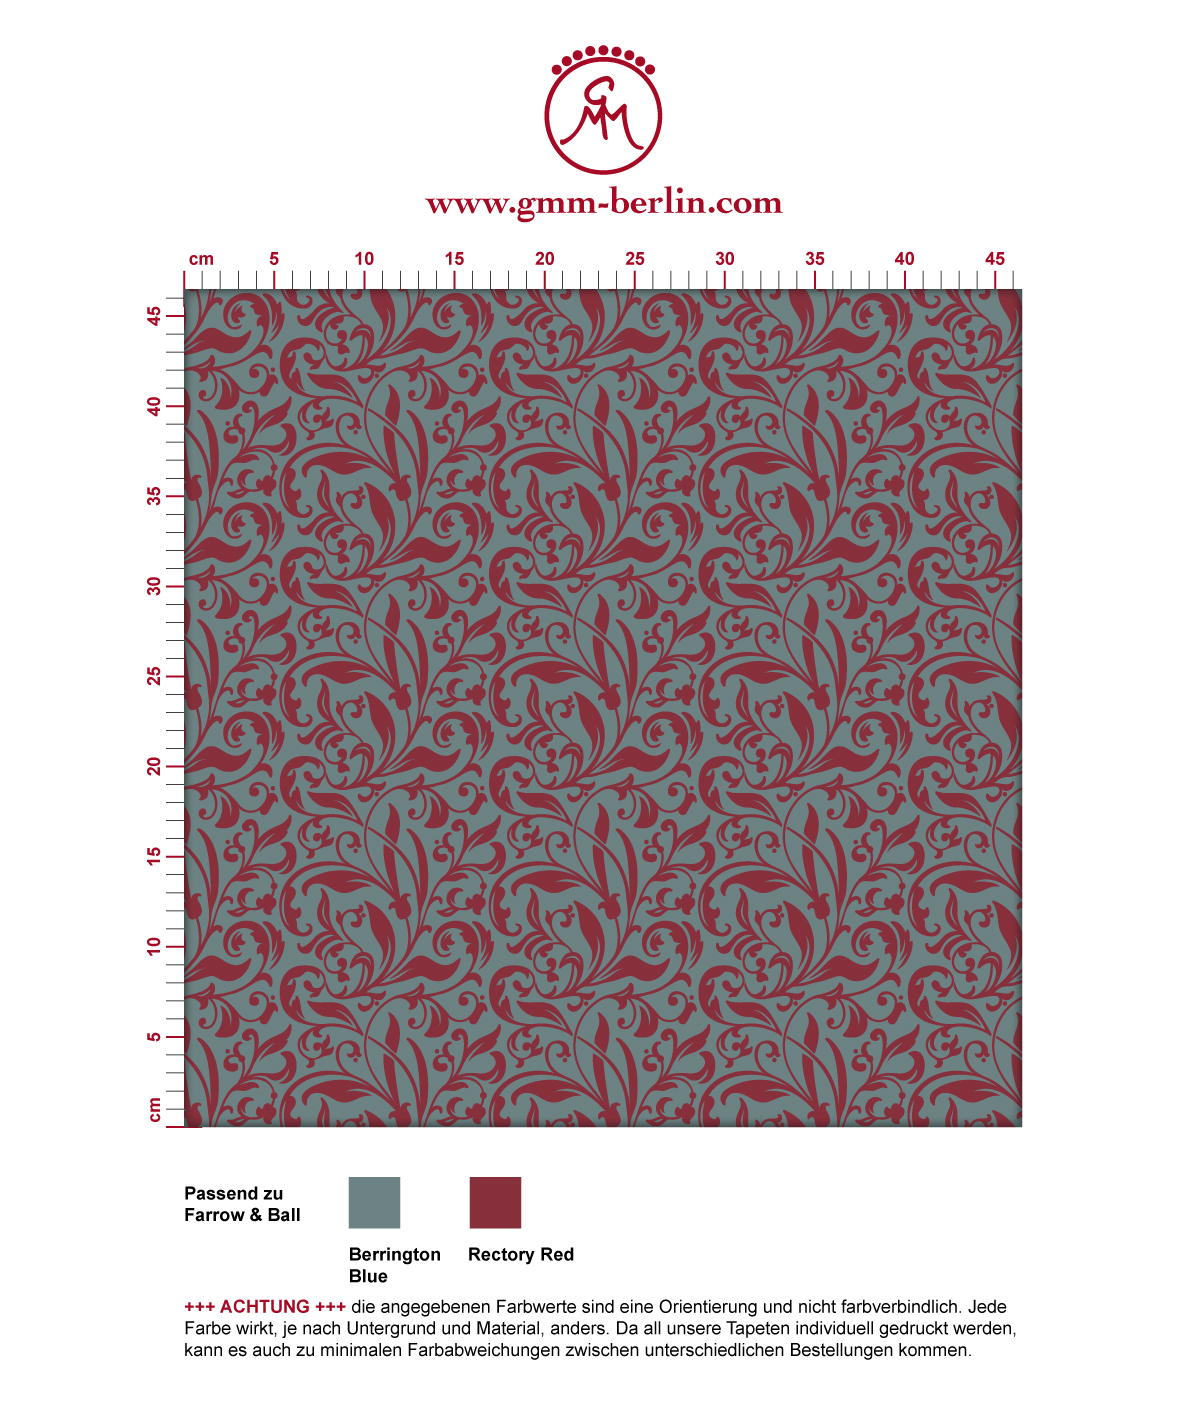 Rote Tapete "Victorian Delight" mit victorianischem Blatt Muster angepasst an Farrow and Ball Wandfarben. Aus dem GMM-BERLIN.com Sortiment: Schöne Tapeten in der Farbe: dunkel rot